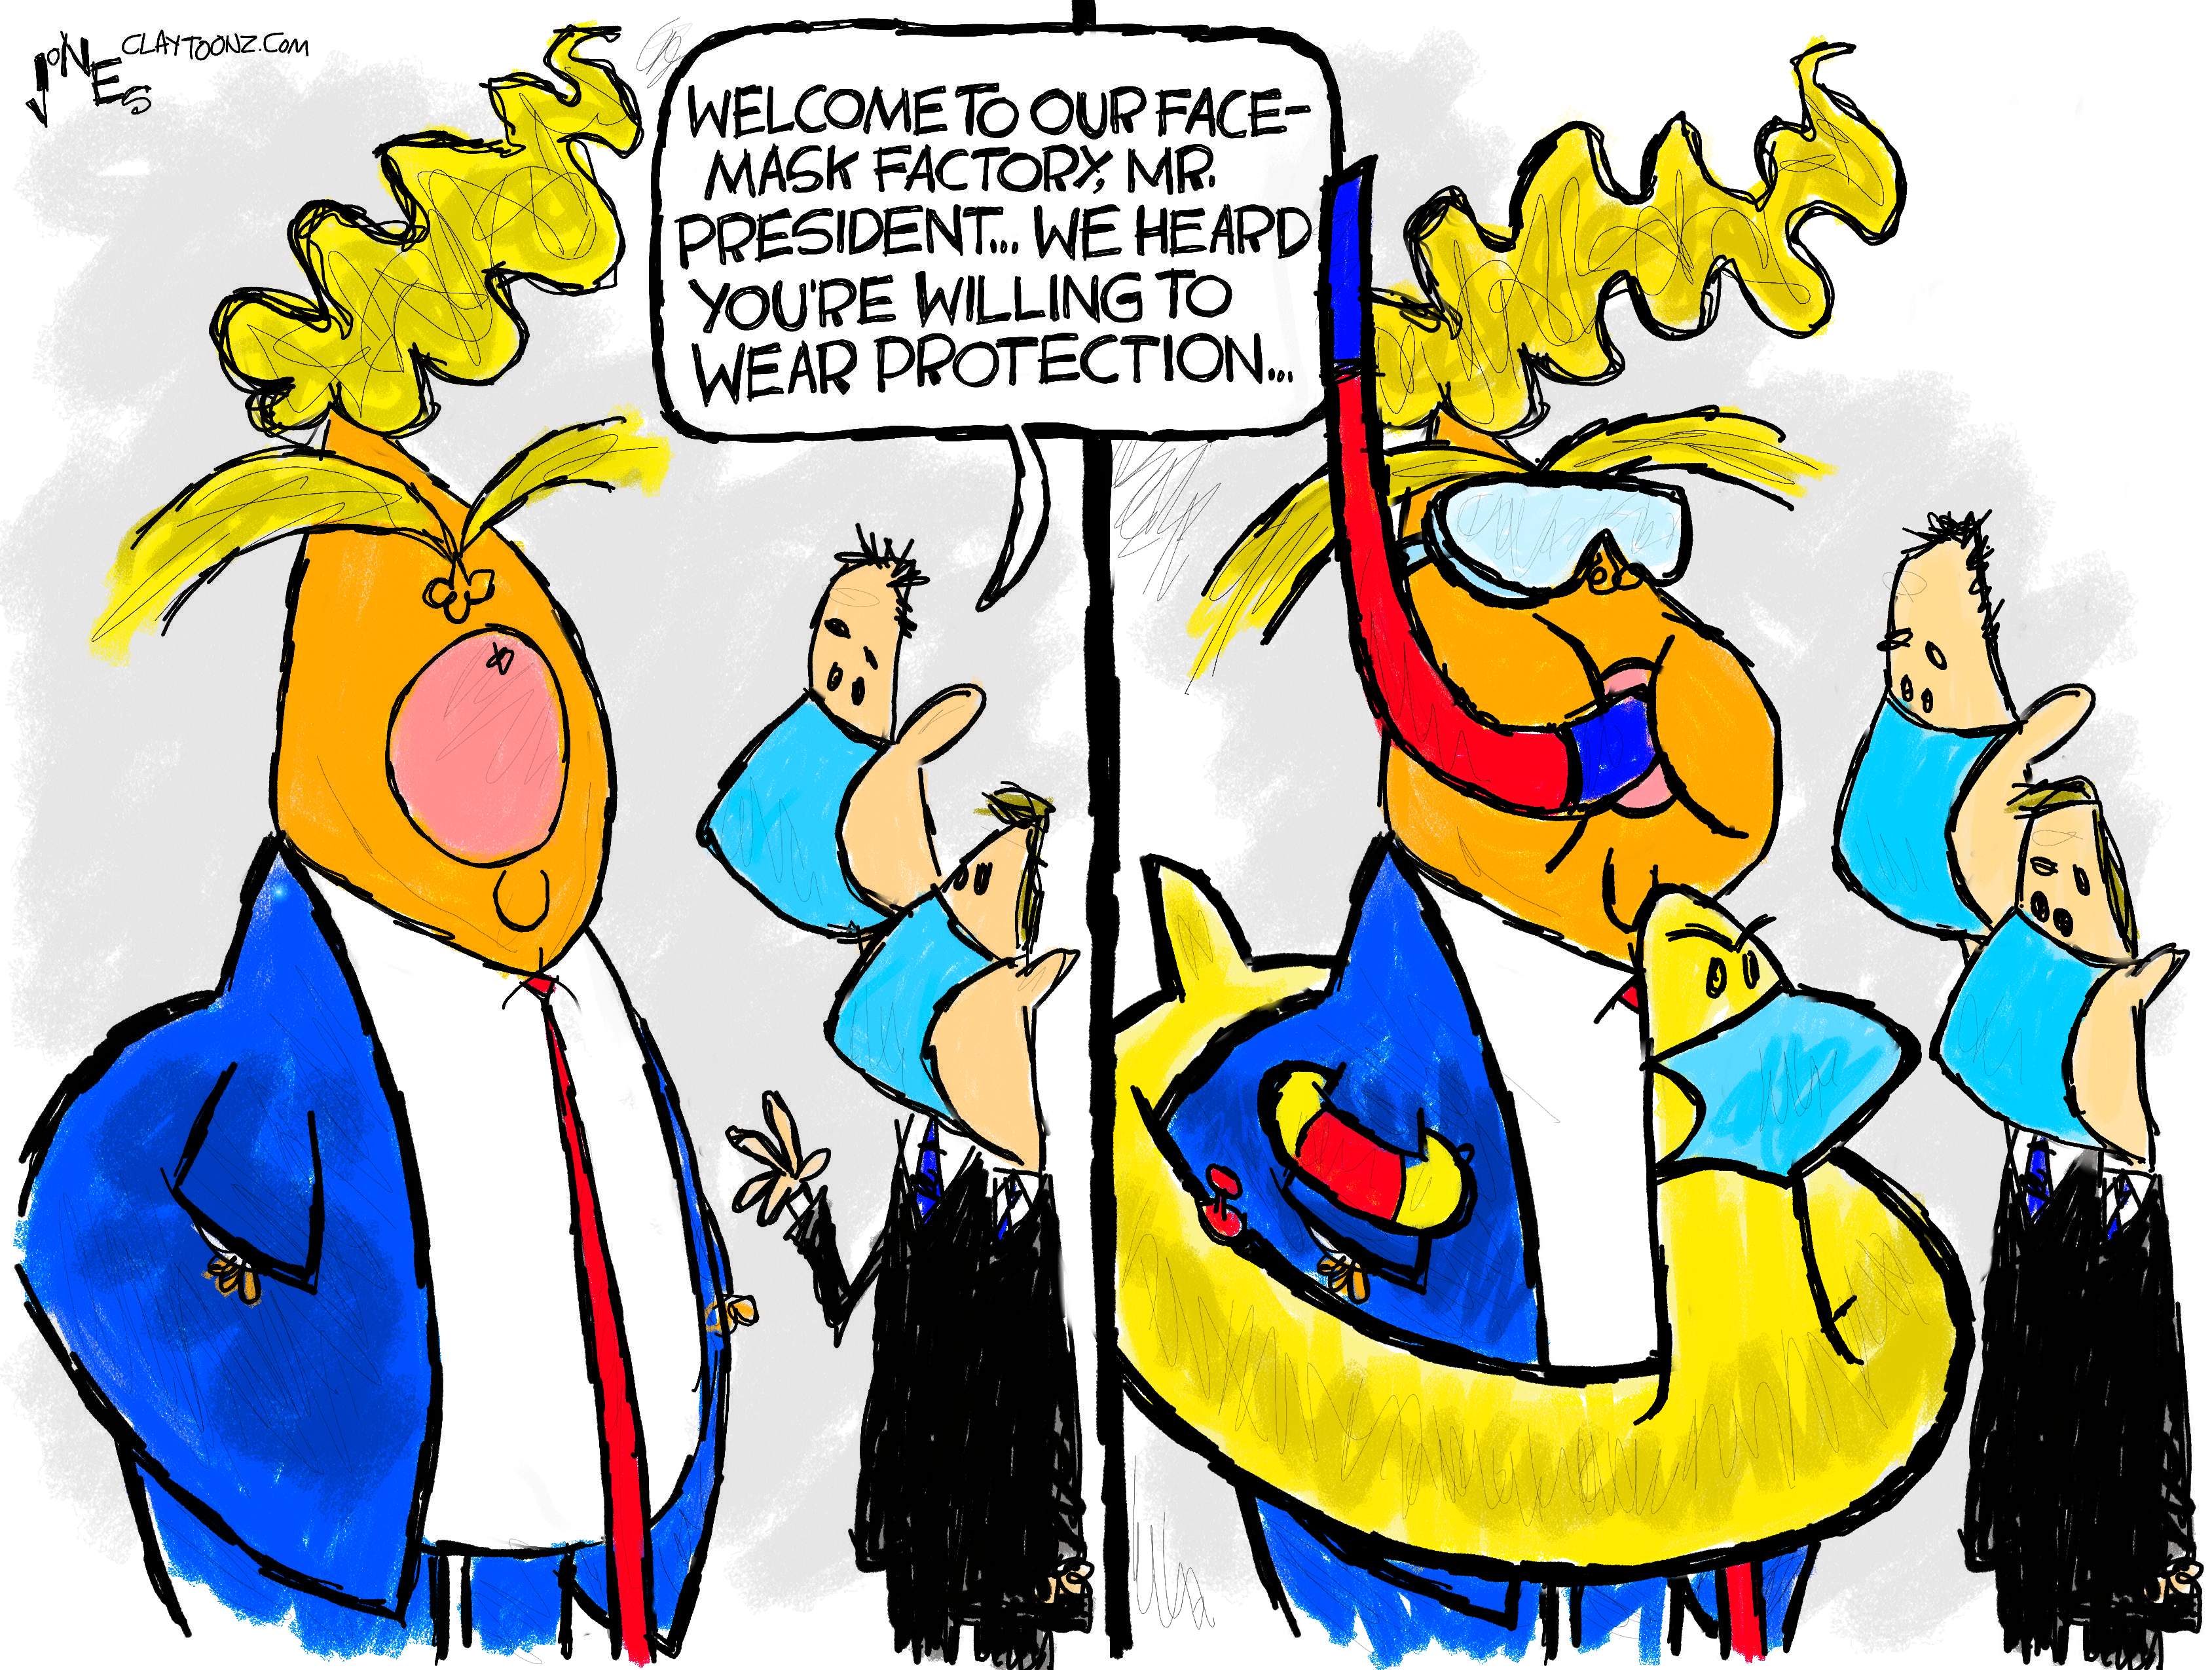 Political Cartoon U.S. Trump mask factory coronavirus